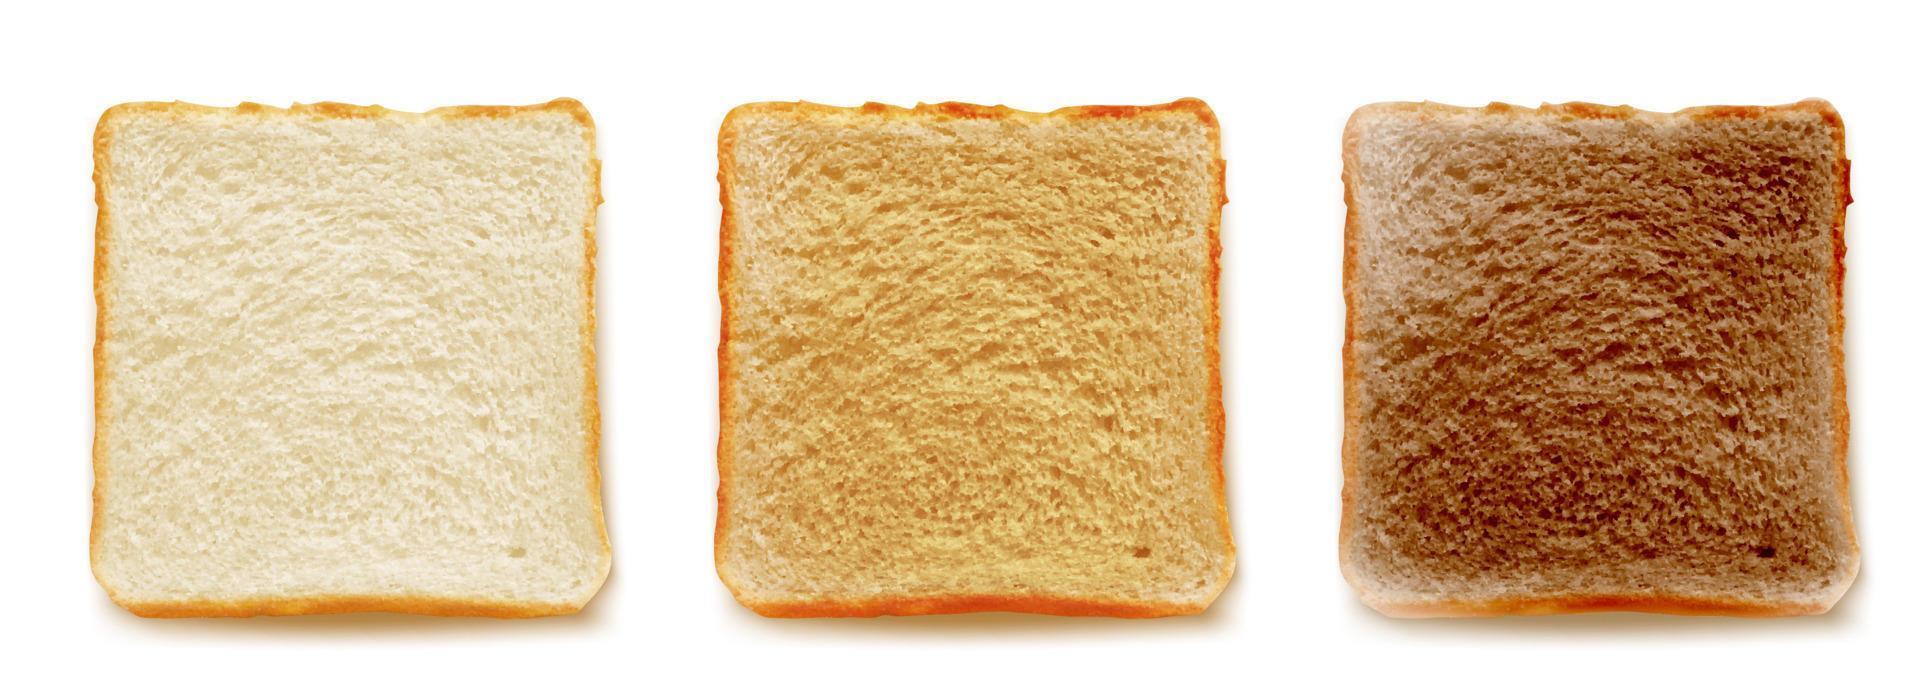 pão torrado para sanduíche 3d isolado vetor